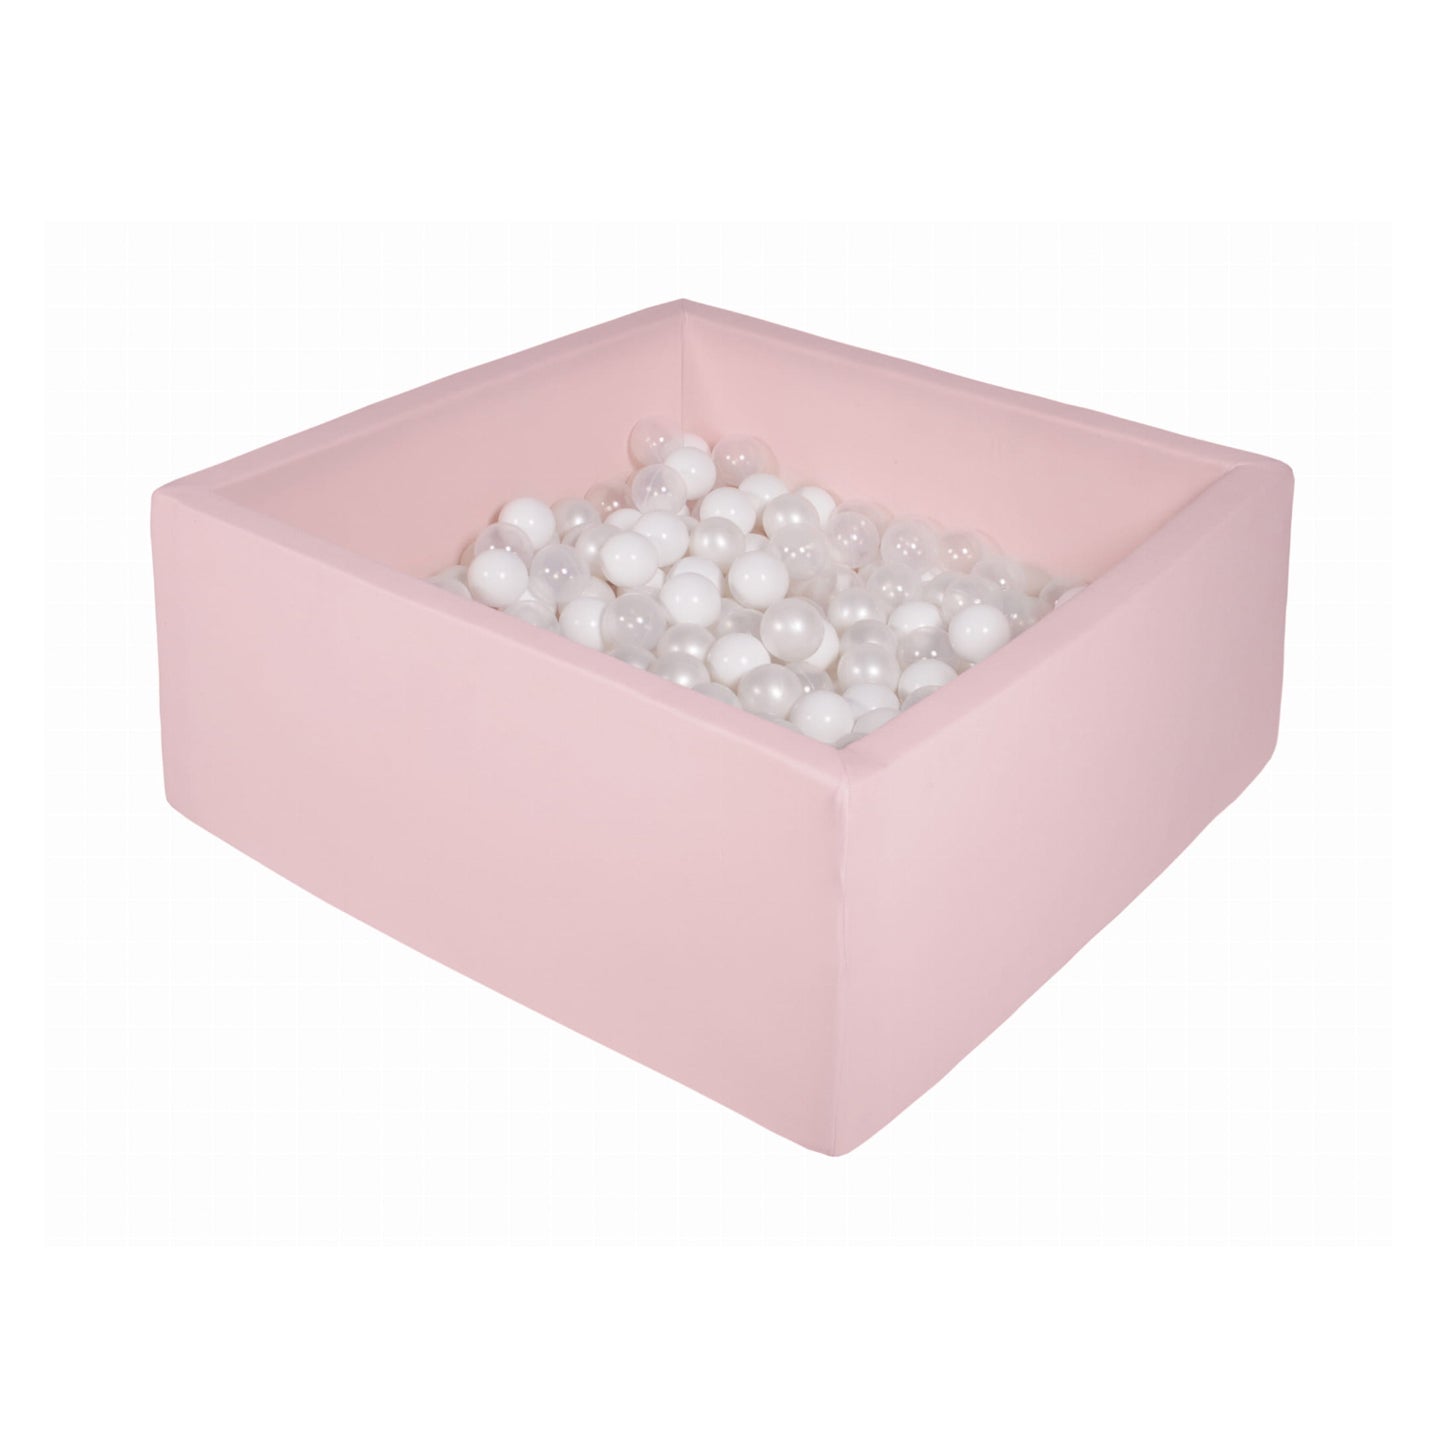 Cotton Square Ball Pit, Pink